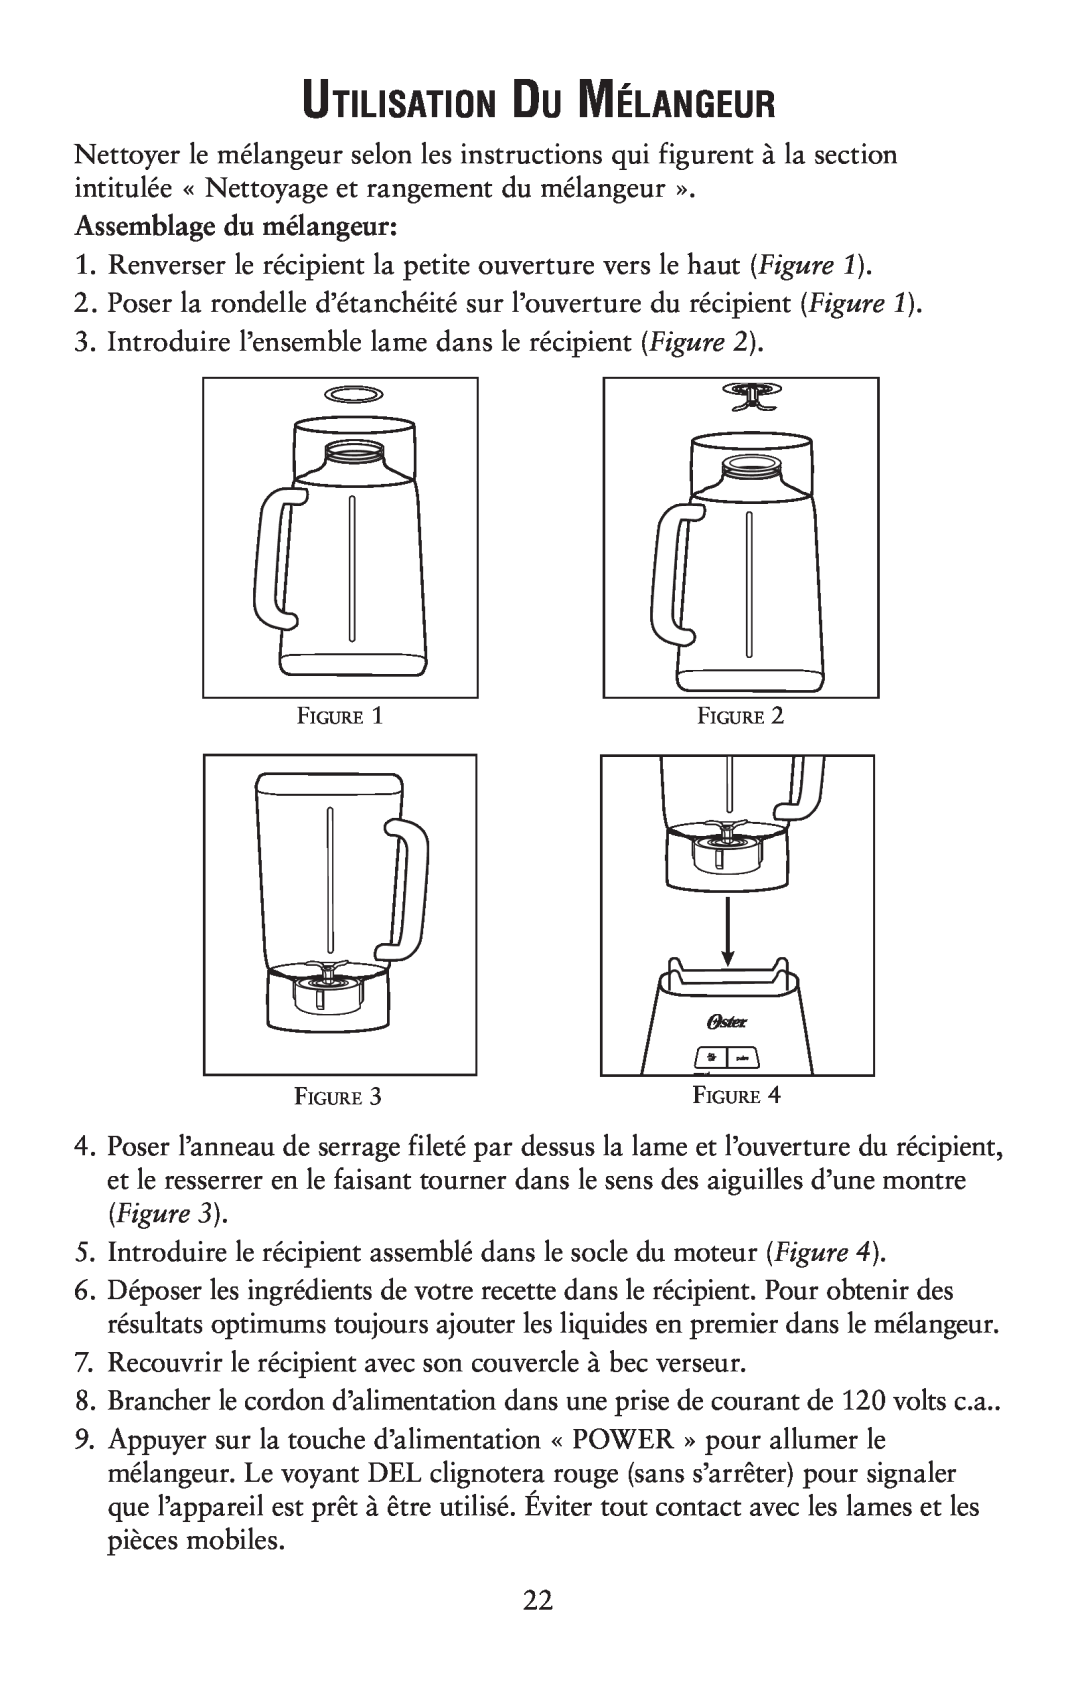 Oster 139846 user manual Utilisation Du Mélangeur, Assemblage du mélangeur, Figure 